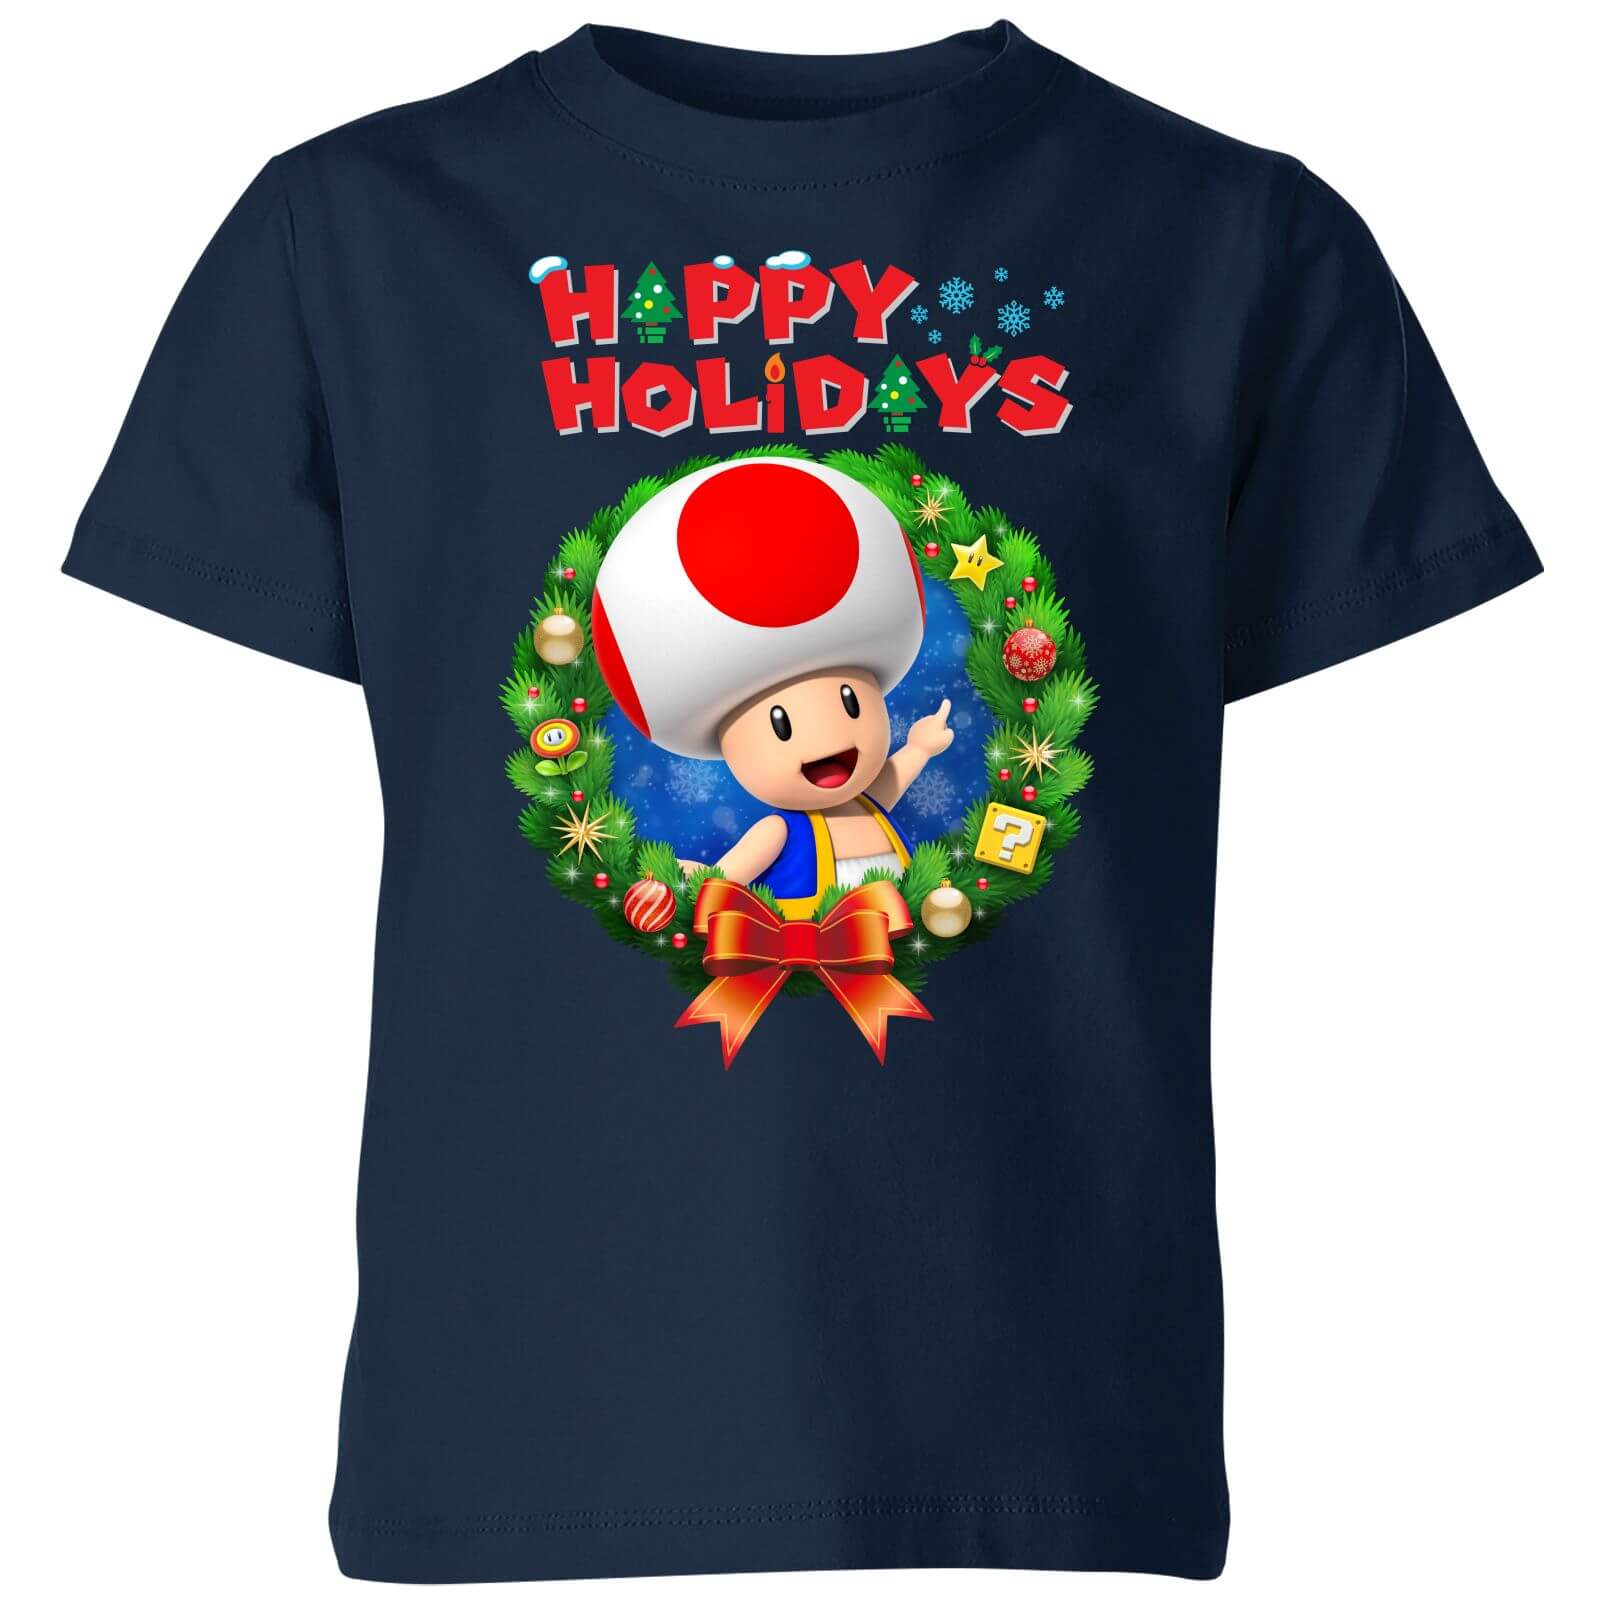 Nintendo Super Mario Toad Happy Holidays Kids' Christmas T-Shirt - Navy - 7-8 Years